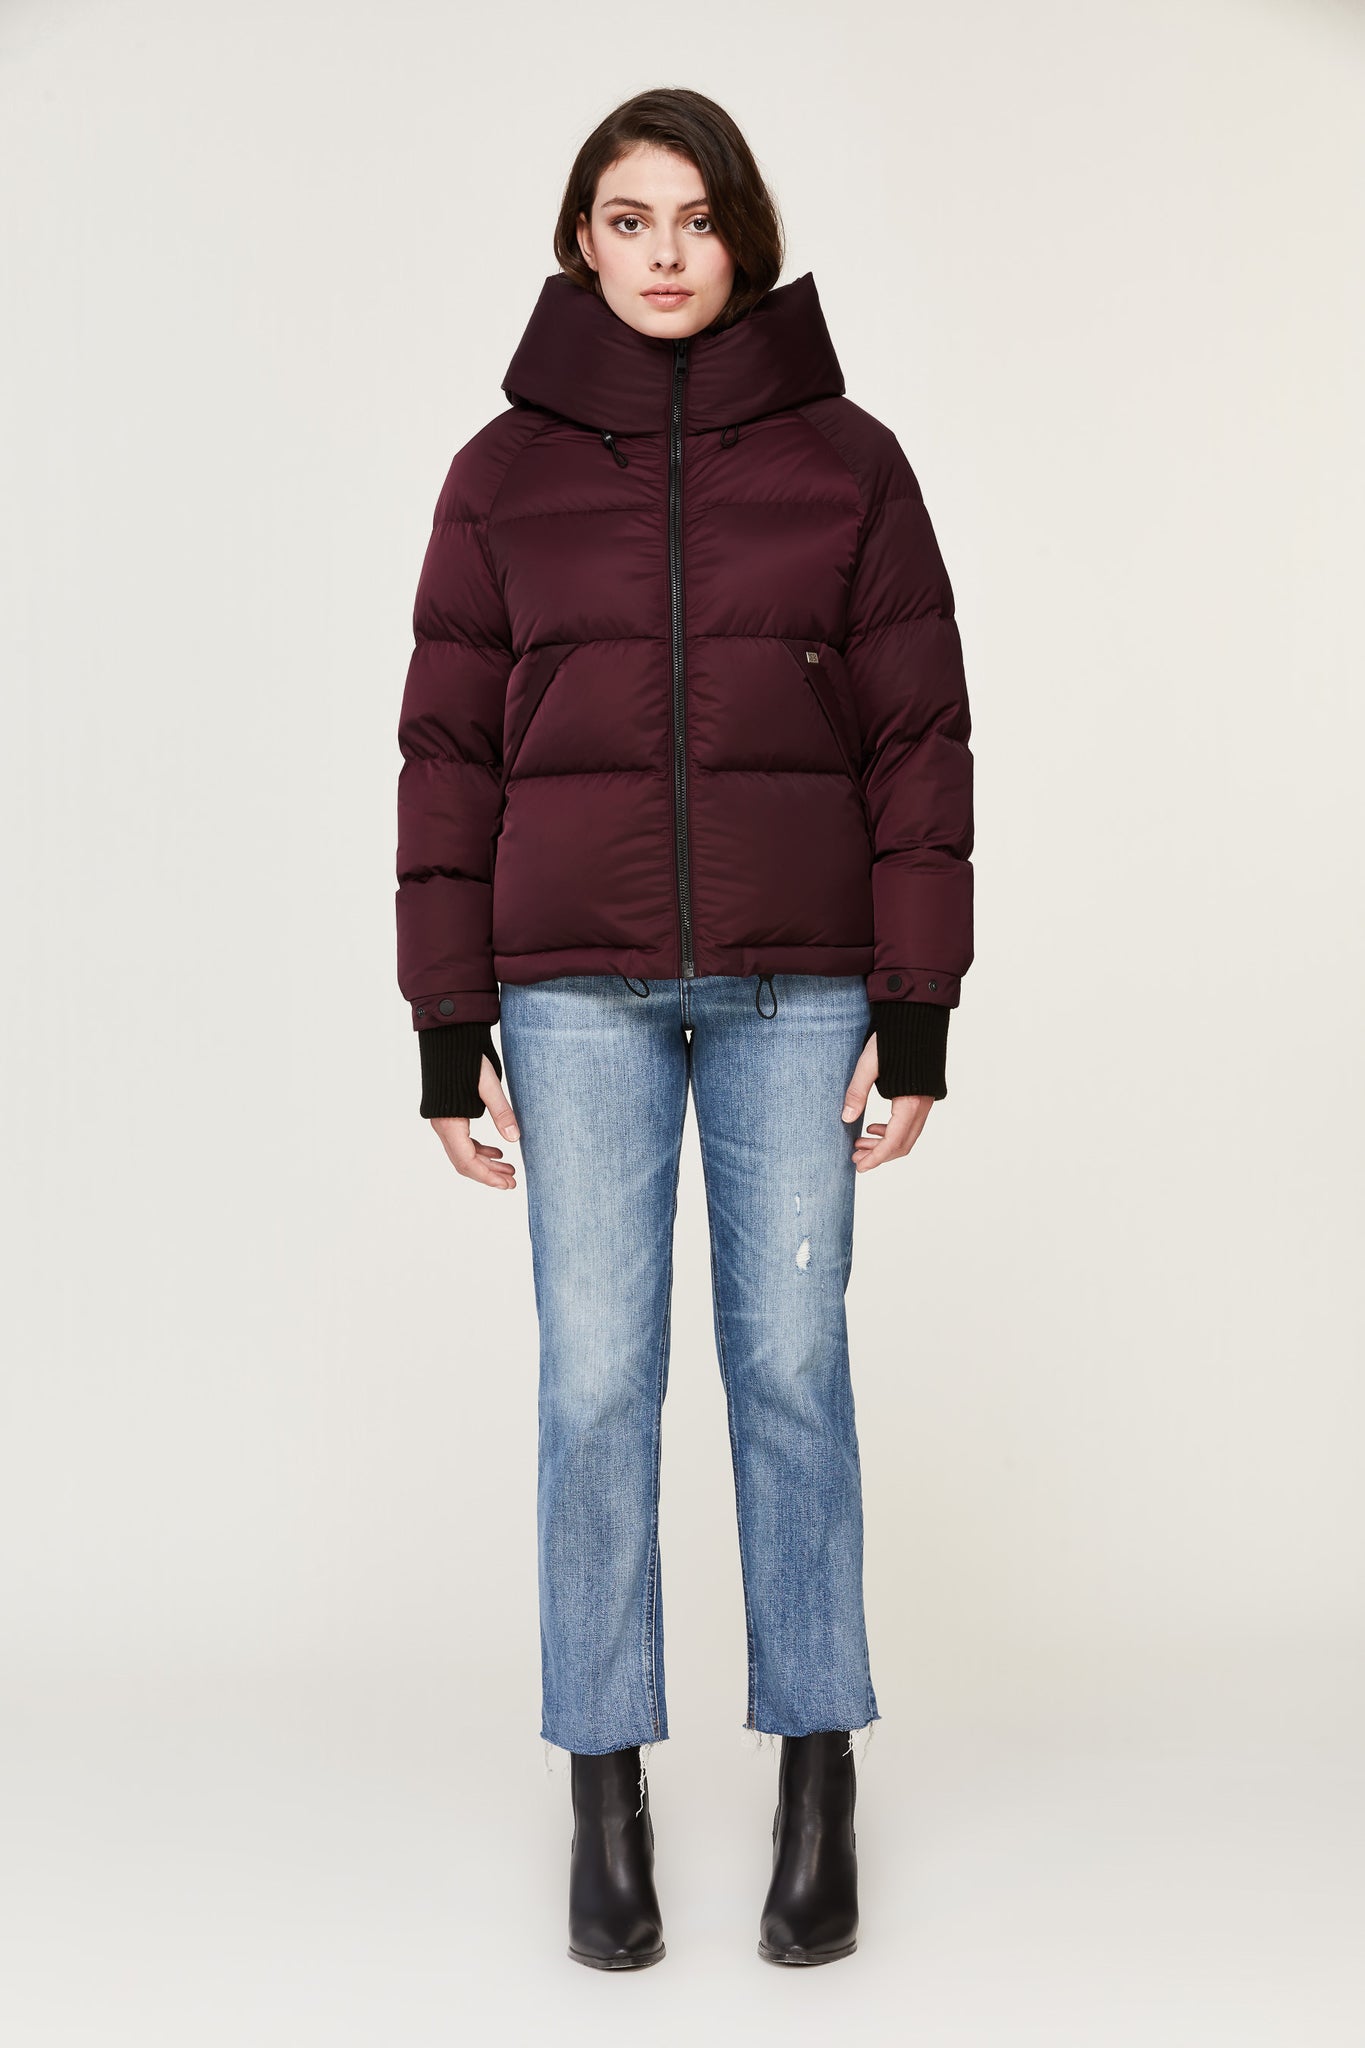  KYL Women's Winter Puffer Jacket Oversized Zip-Up